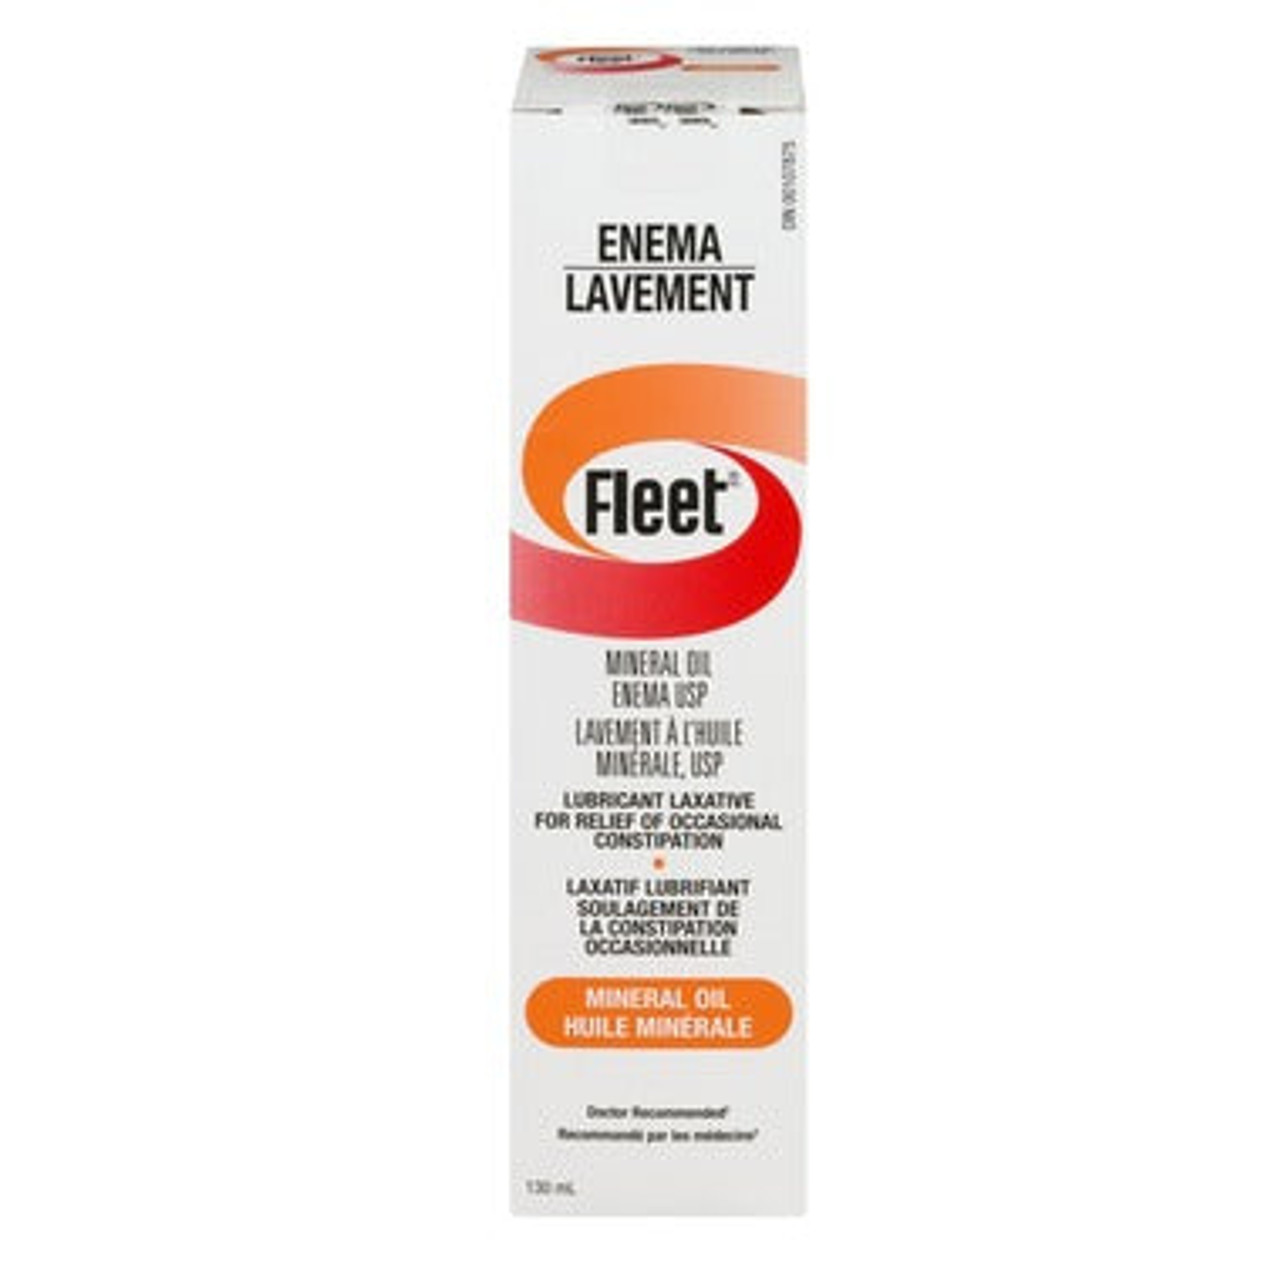 Fleet Enema Mineral Oil Adl 301